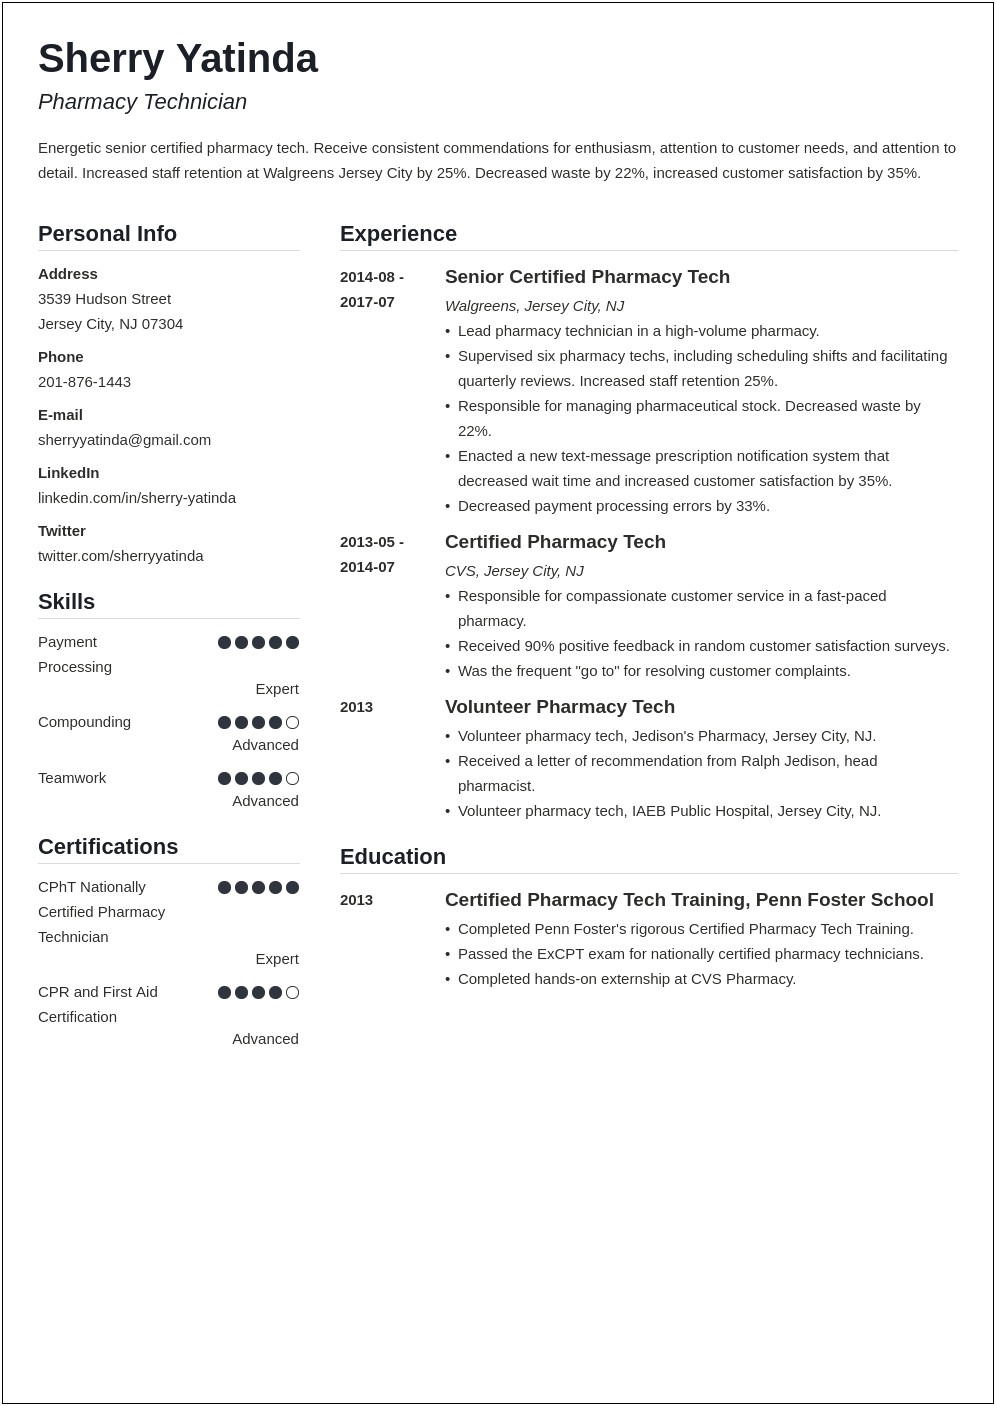 Entry Level Pharmacy Technician Resume Objective